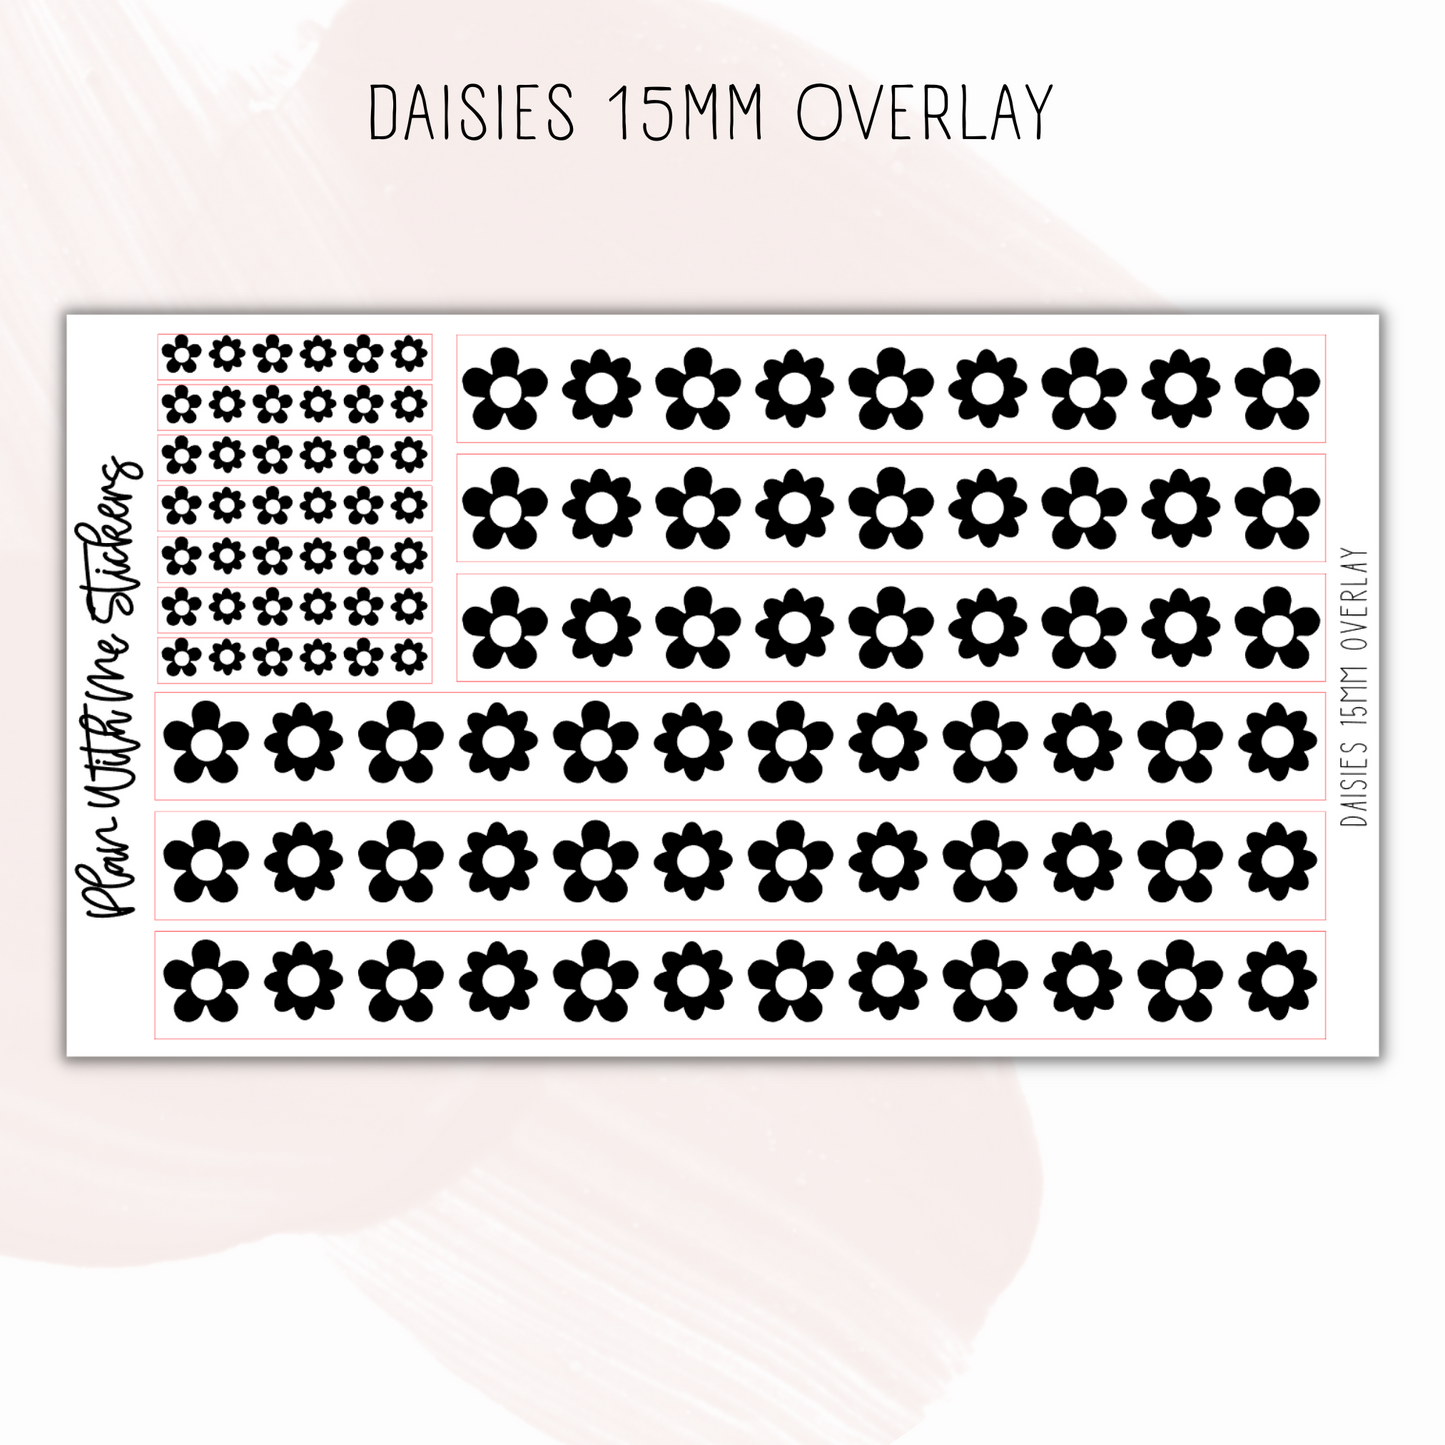 Daisies 15mm Overlays